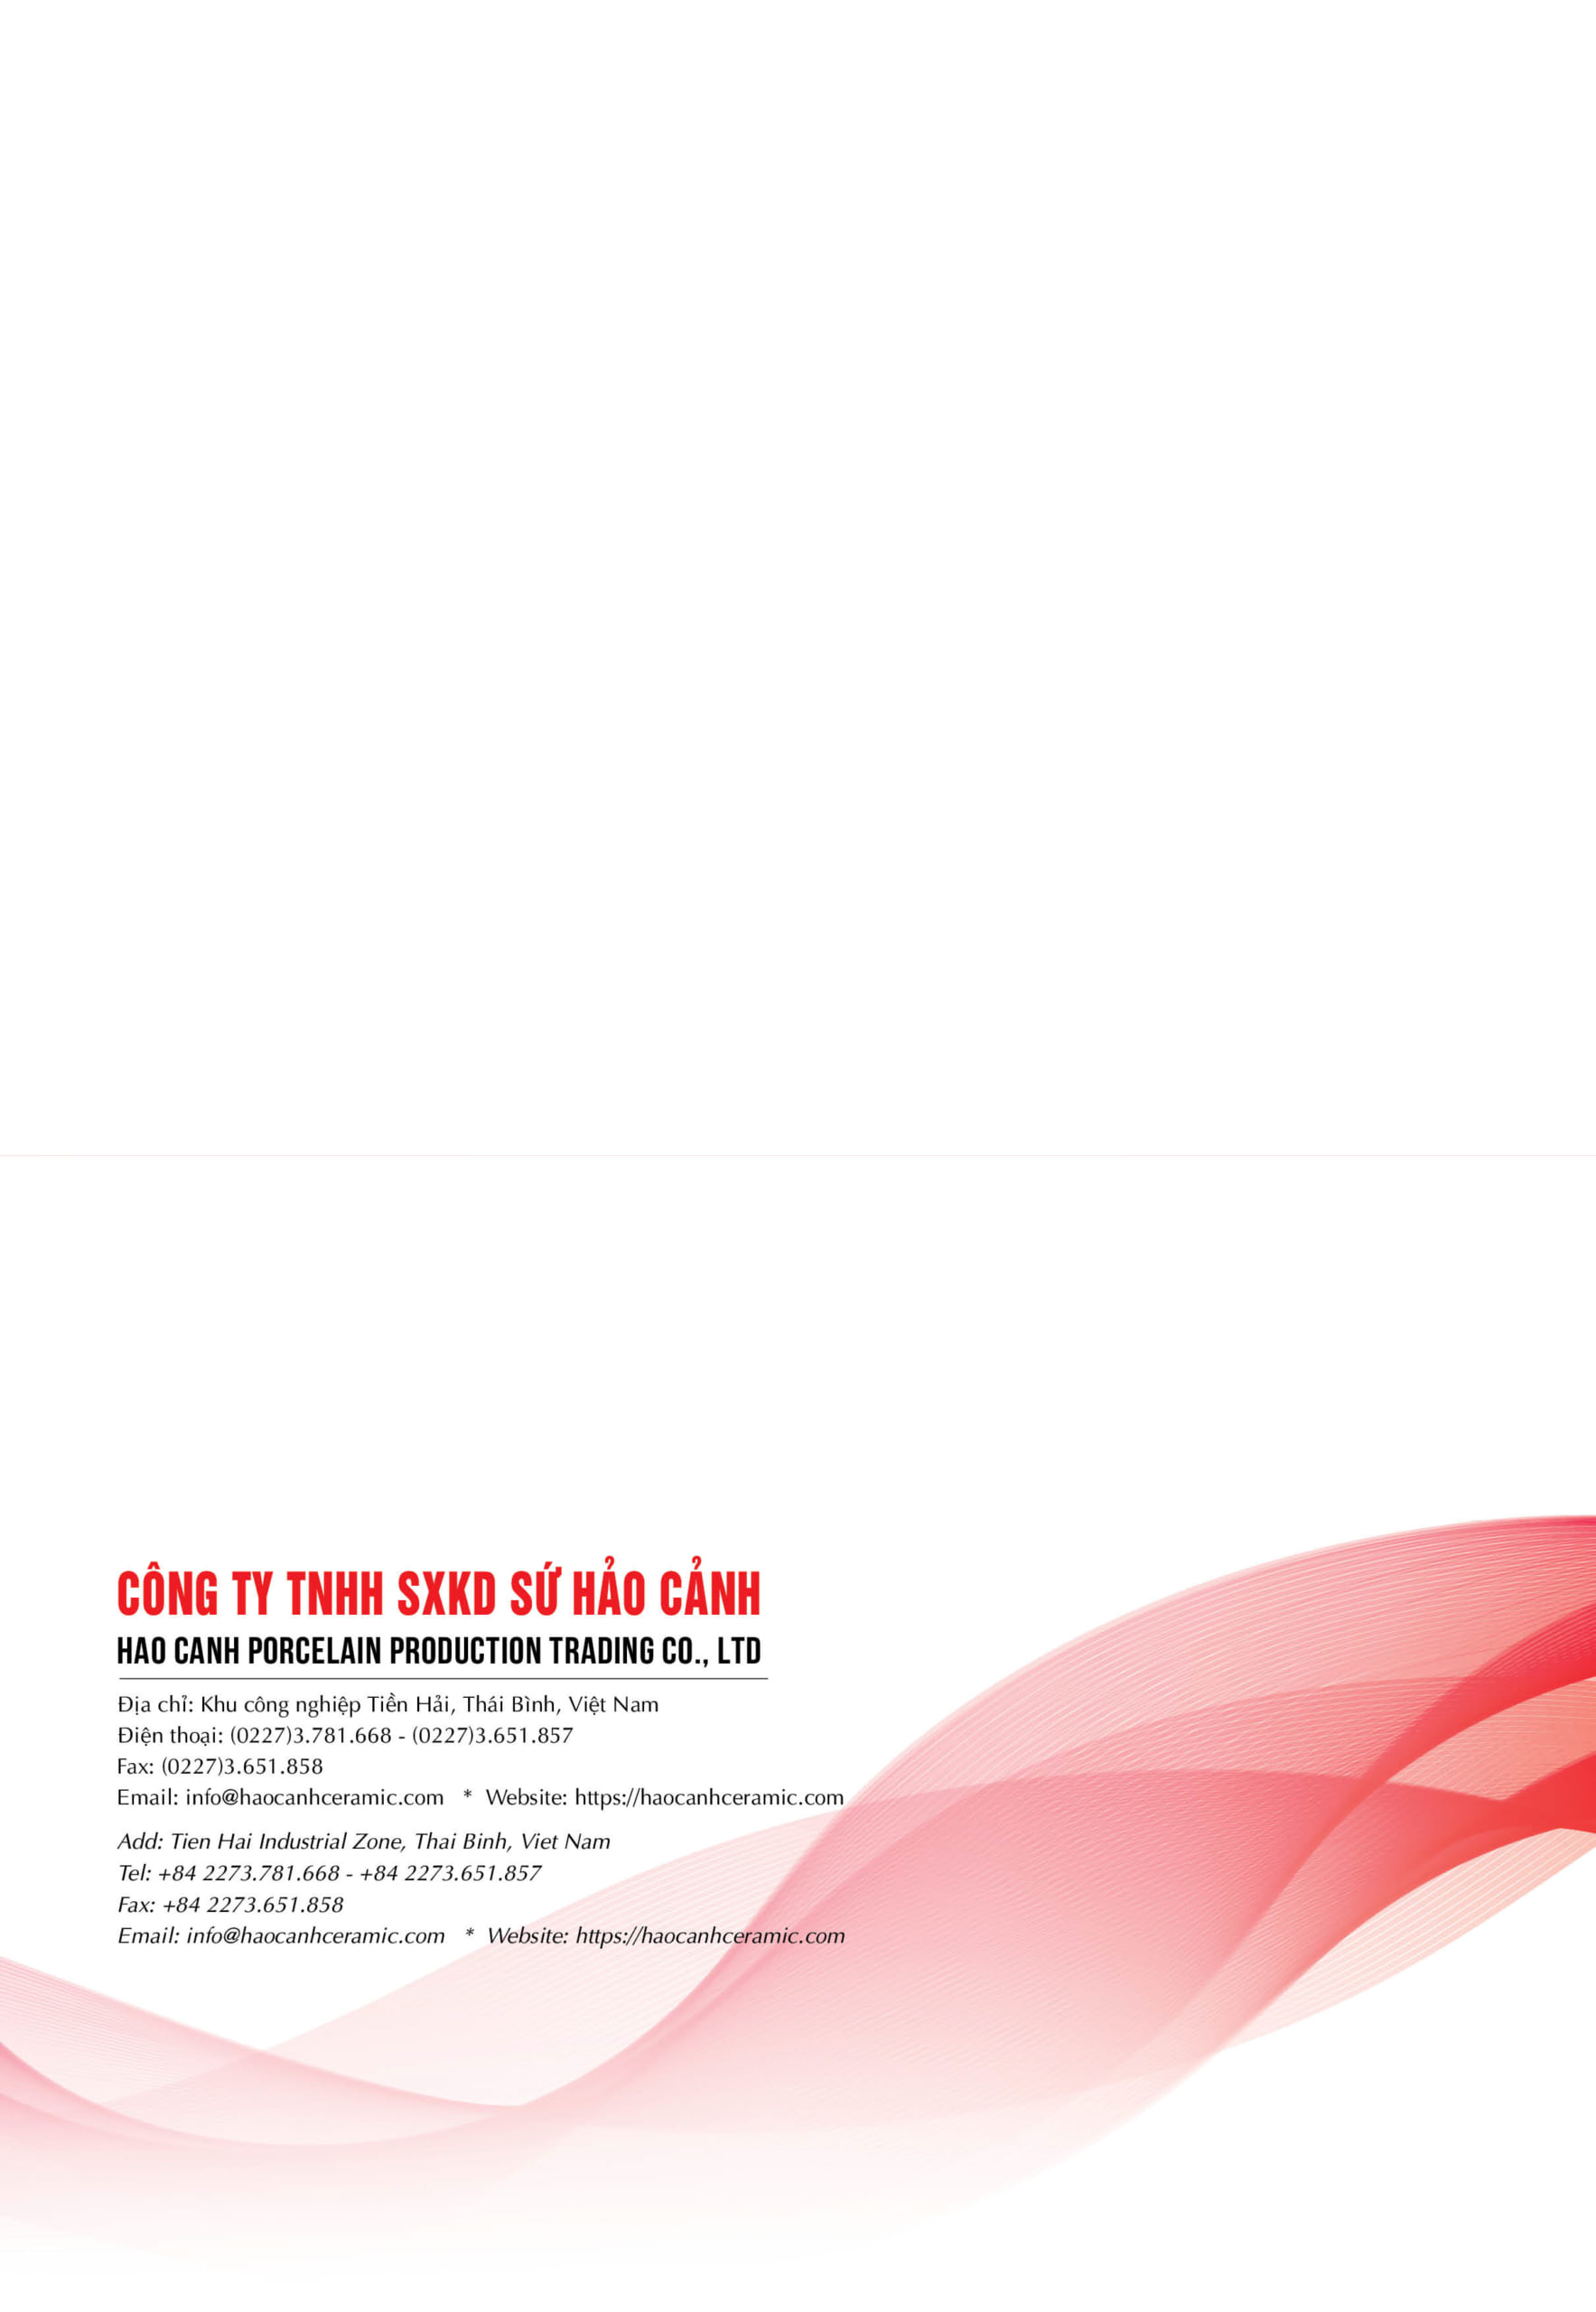 Hao Canh Ceramic Company Profile 34 scaled